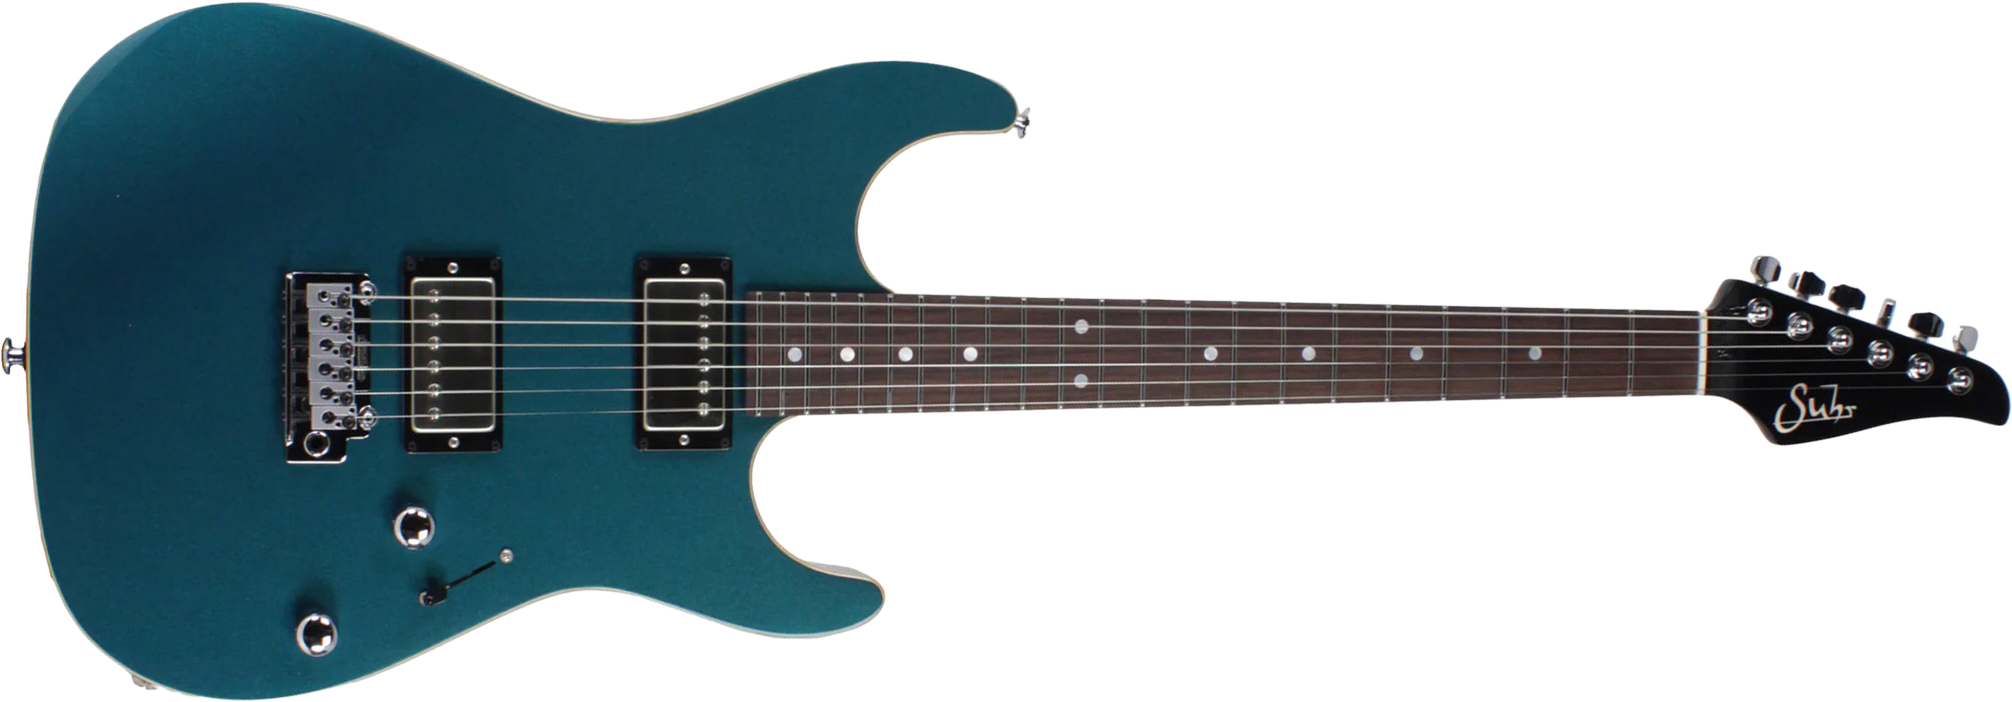 Suhr Pete Thorn Standard 01-sig-0012 Signature 2h Trem Rw - Ocean Turquoise Metallic - Str shape electric guitar - Main picture